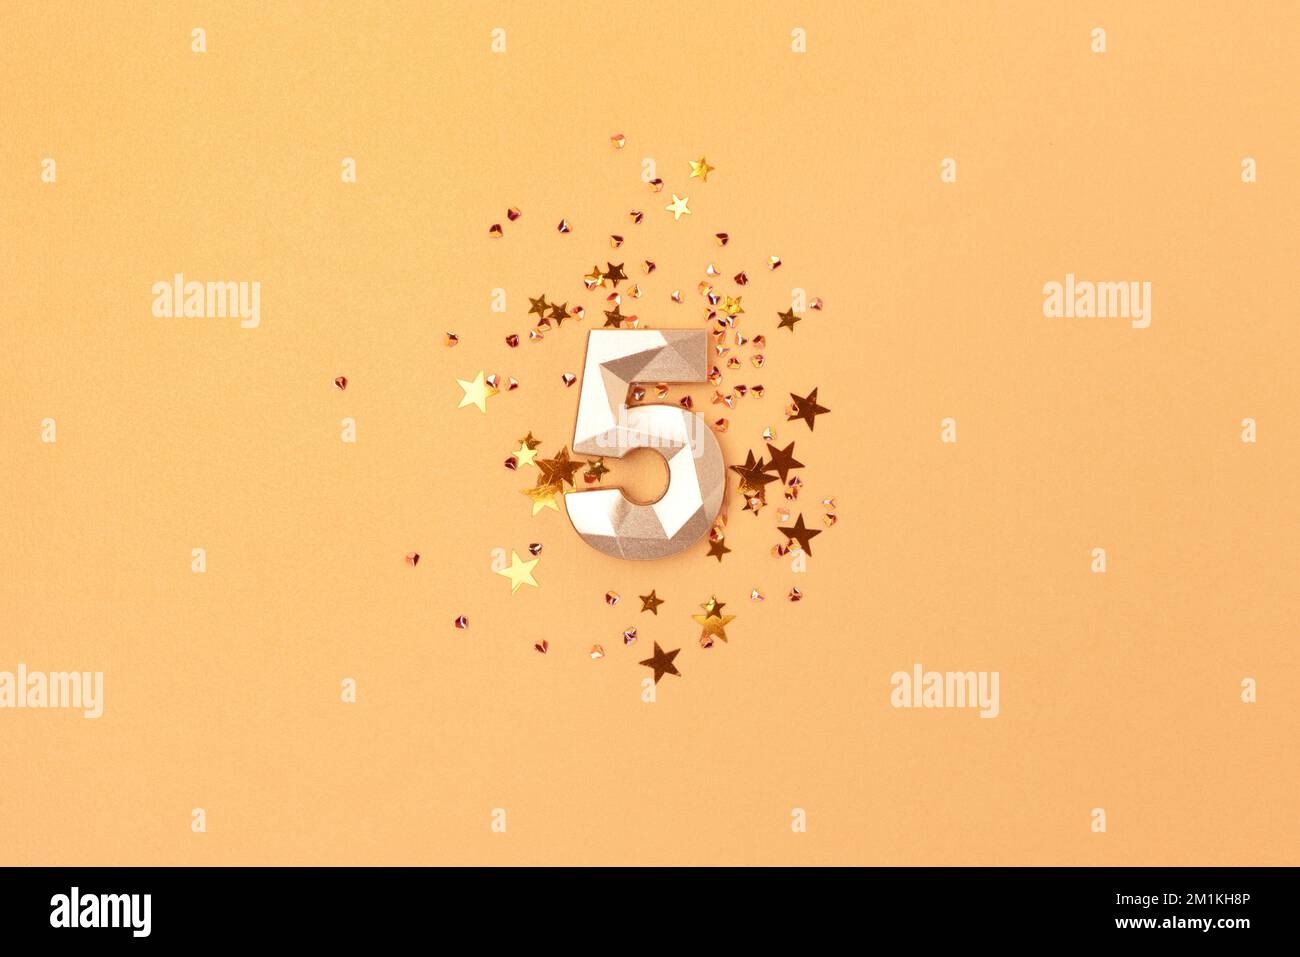 Gold colored number 5 and stars confetti. Festive monochrome concept. Stock Photo